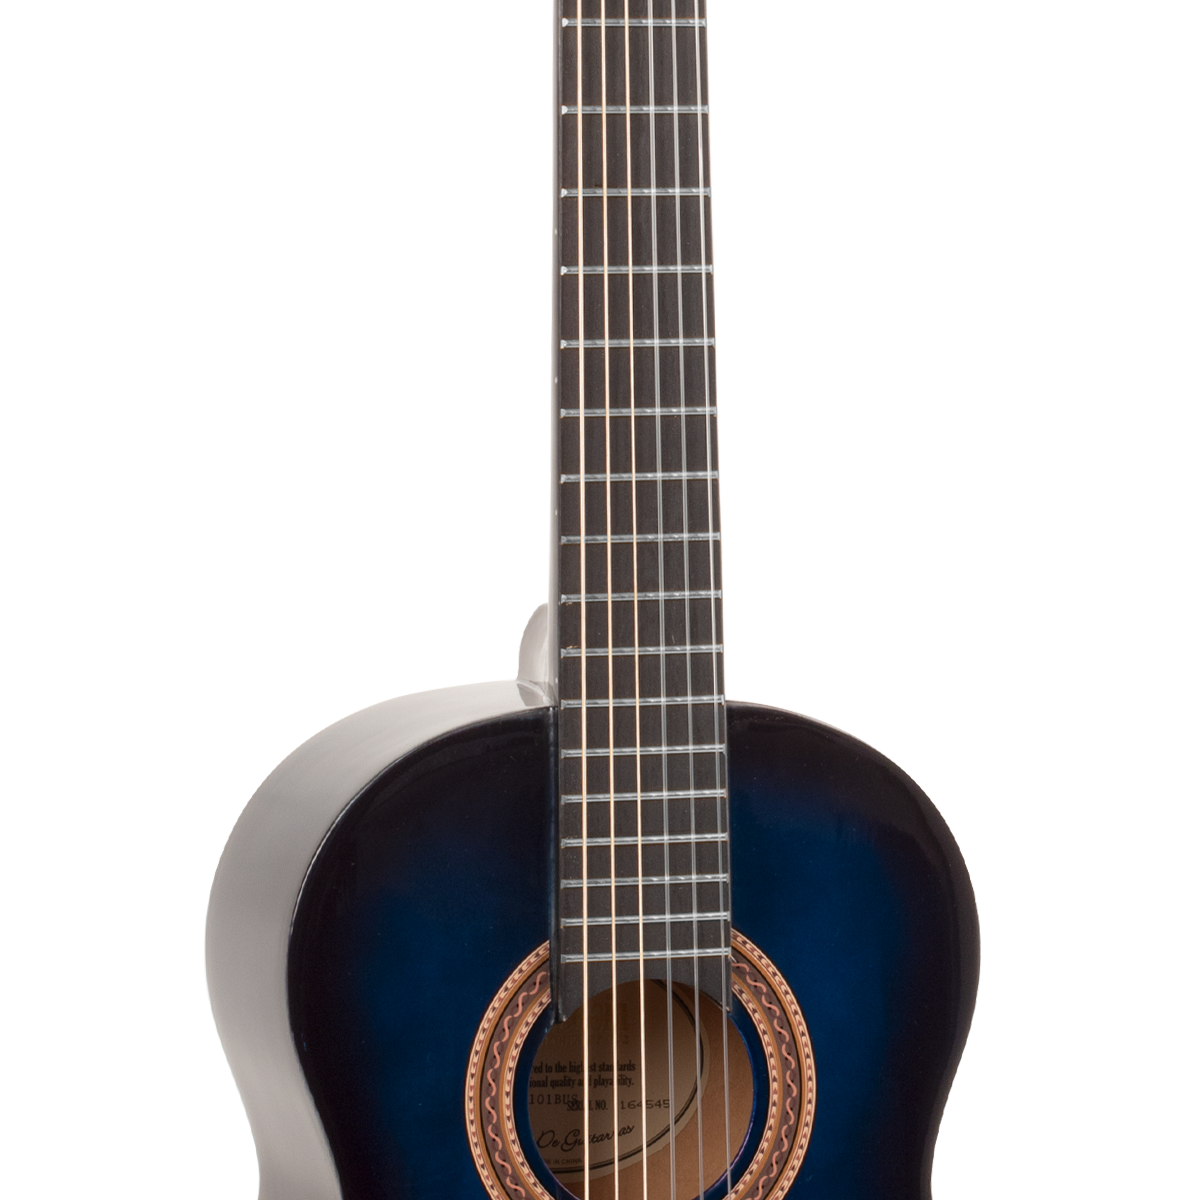 Valencia Classical Guitar 1/4 (Blue Sunburst)